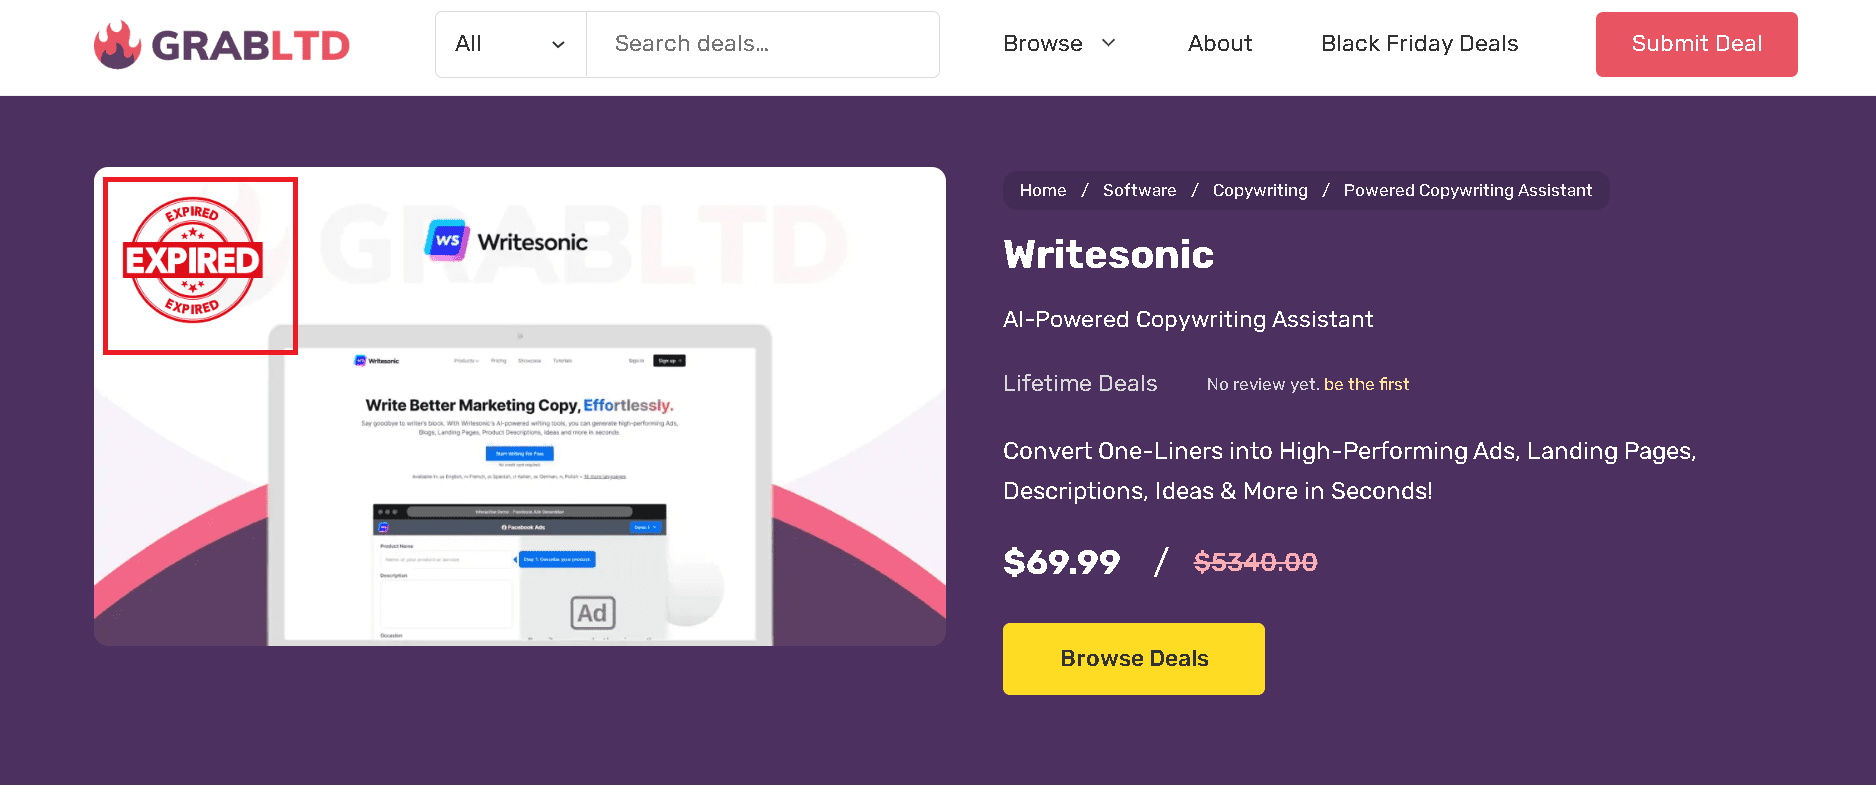 Writesonic expired lifetime deal